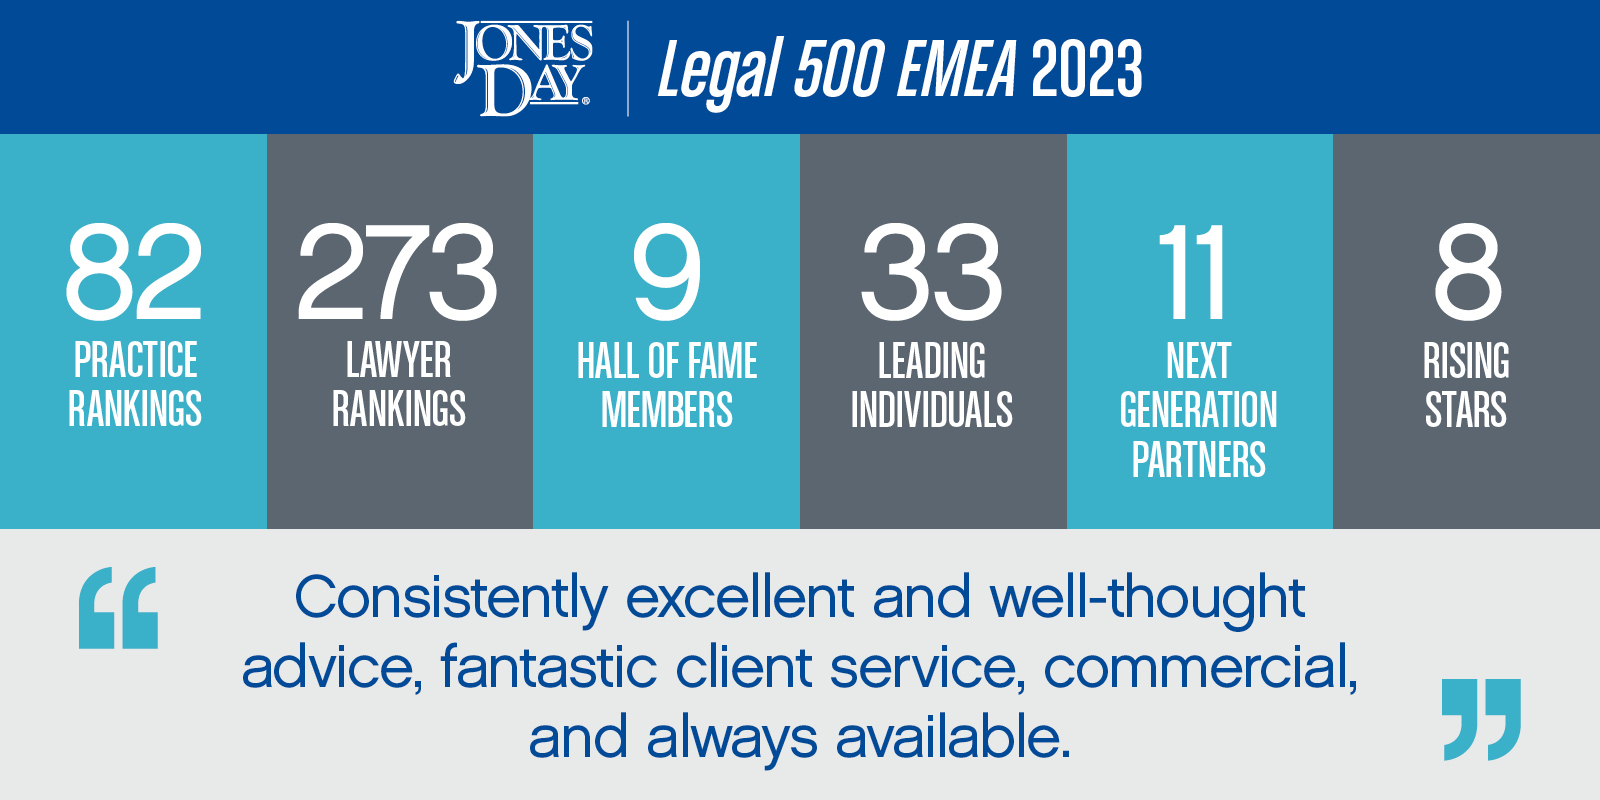 Legal 500 EMEA Infographic_2023